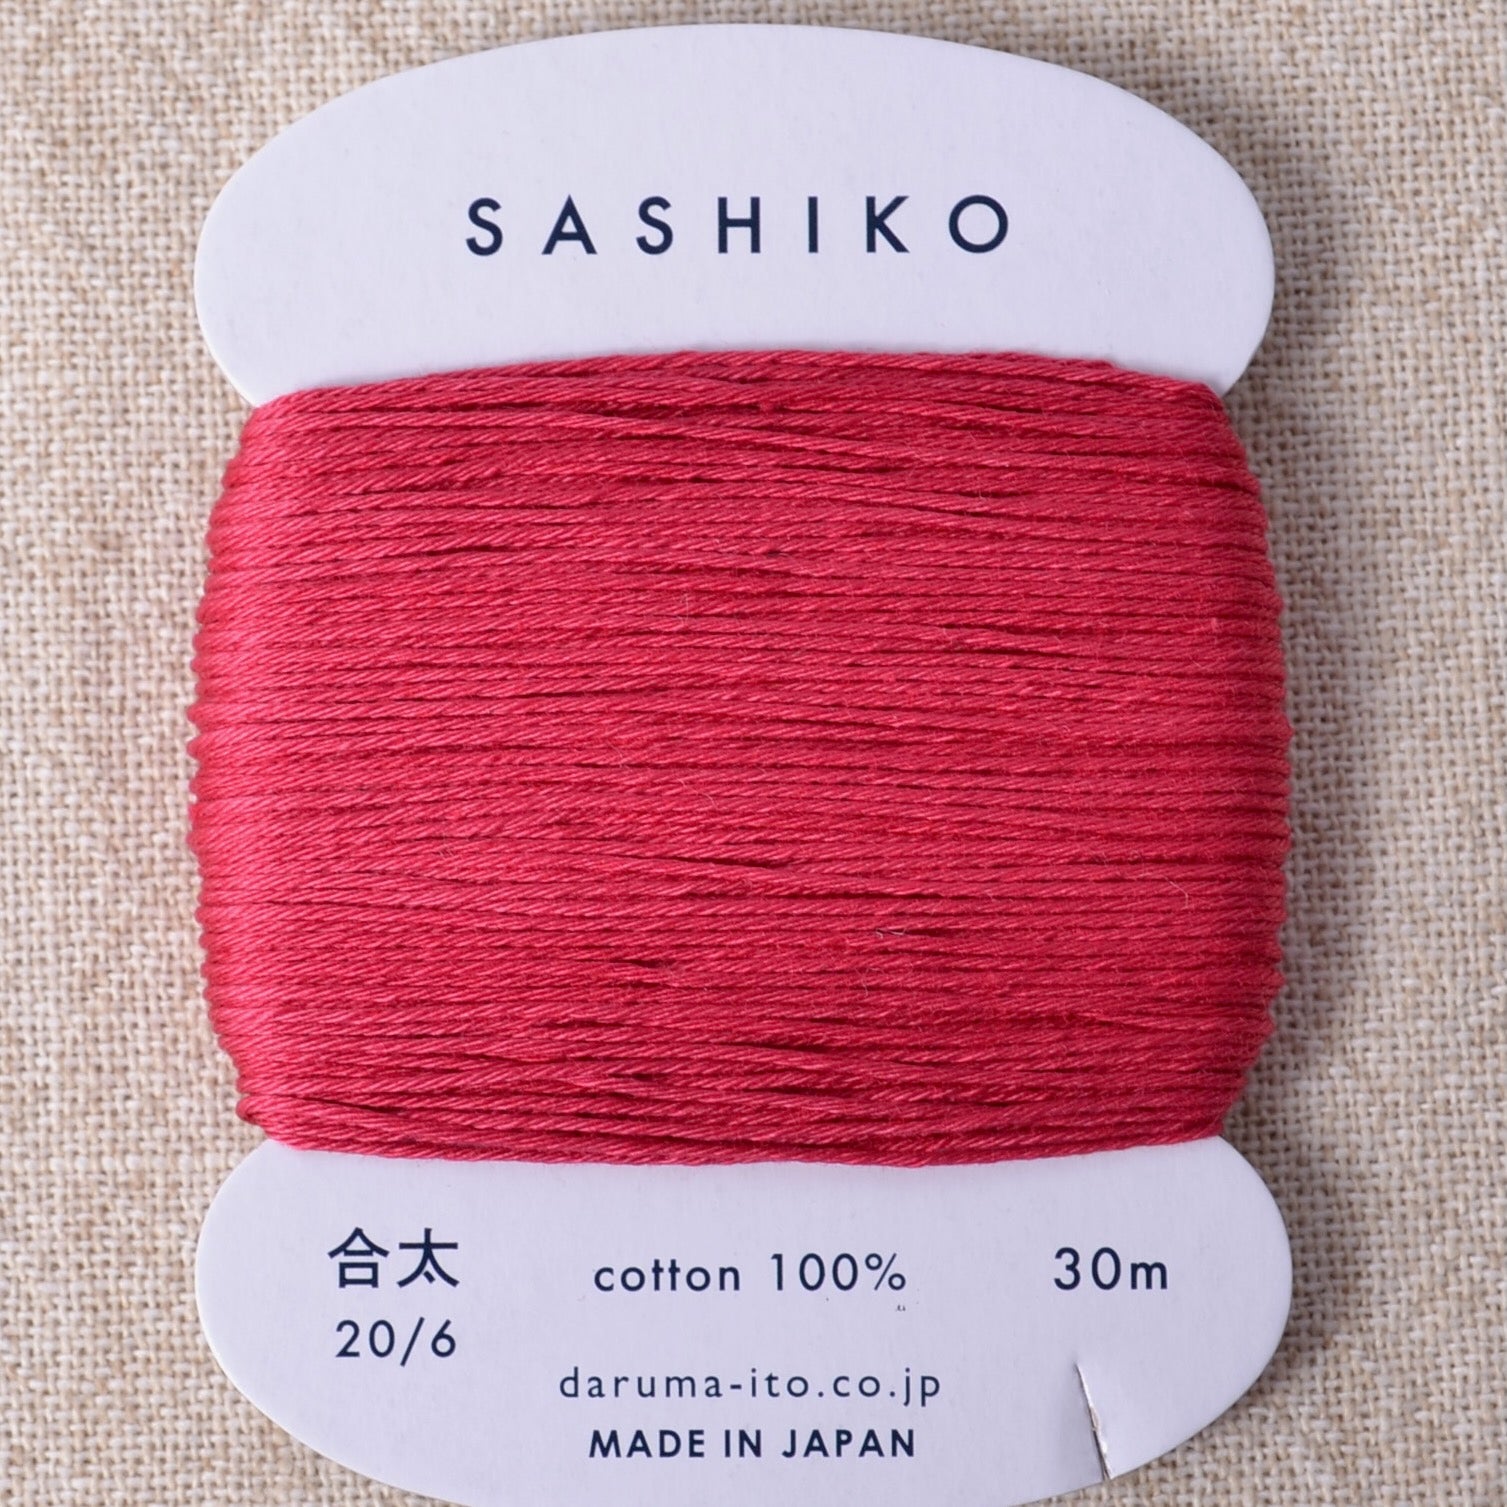 Red sashiko thread